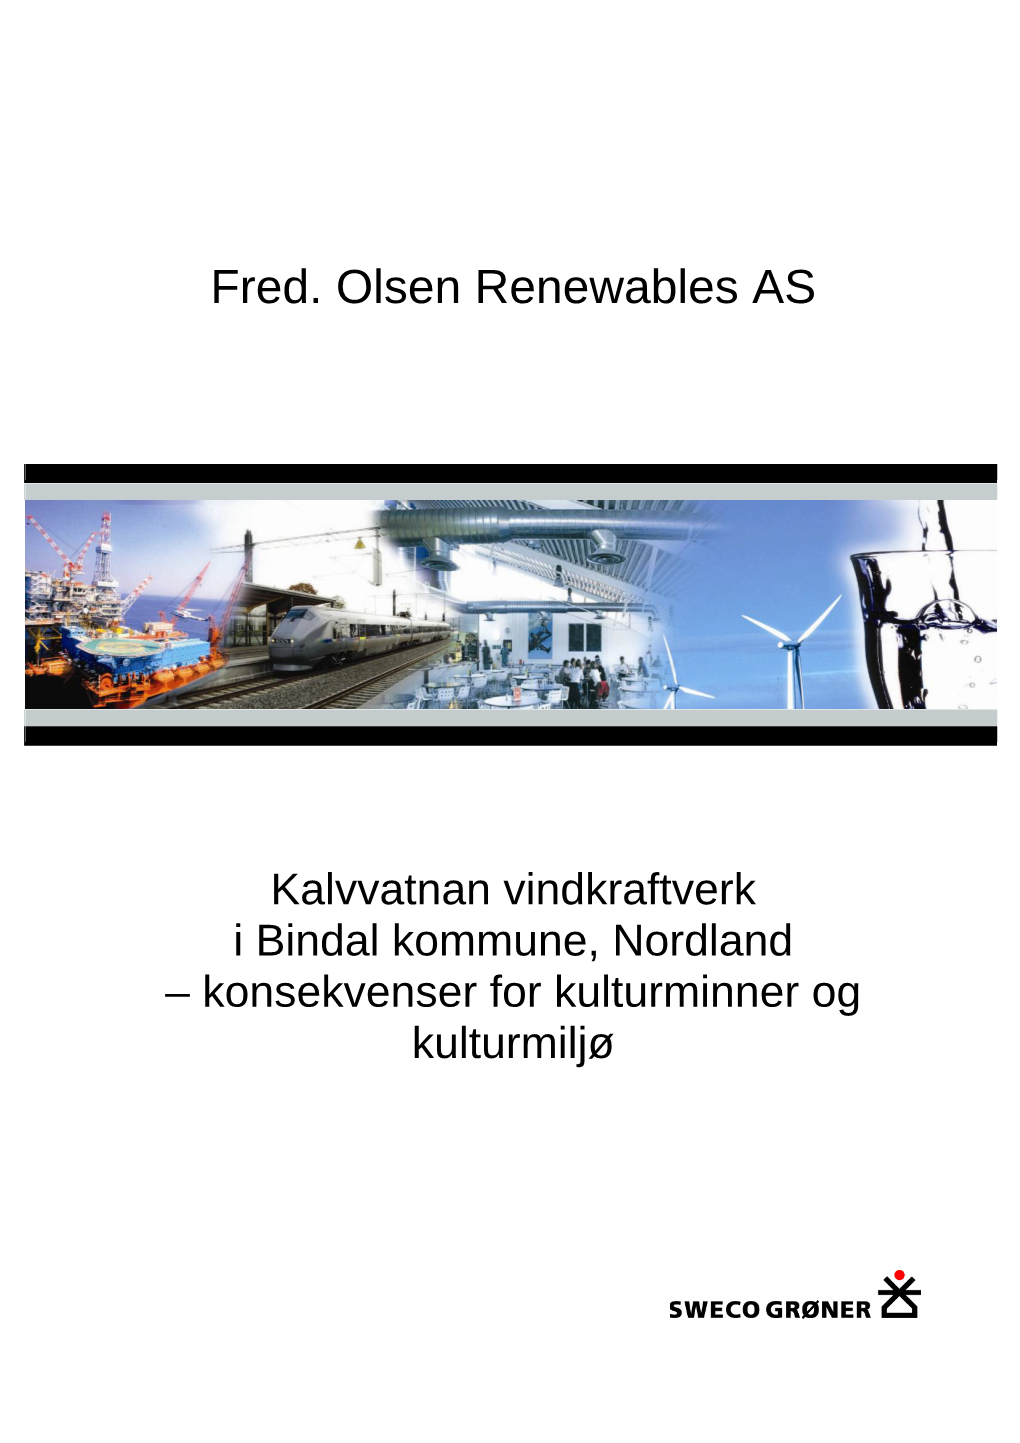 Fred. Olsen Renewables AS